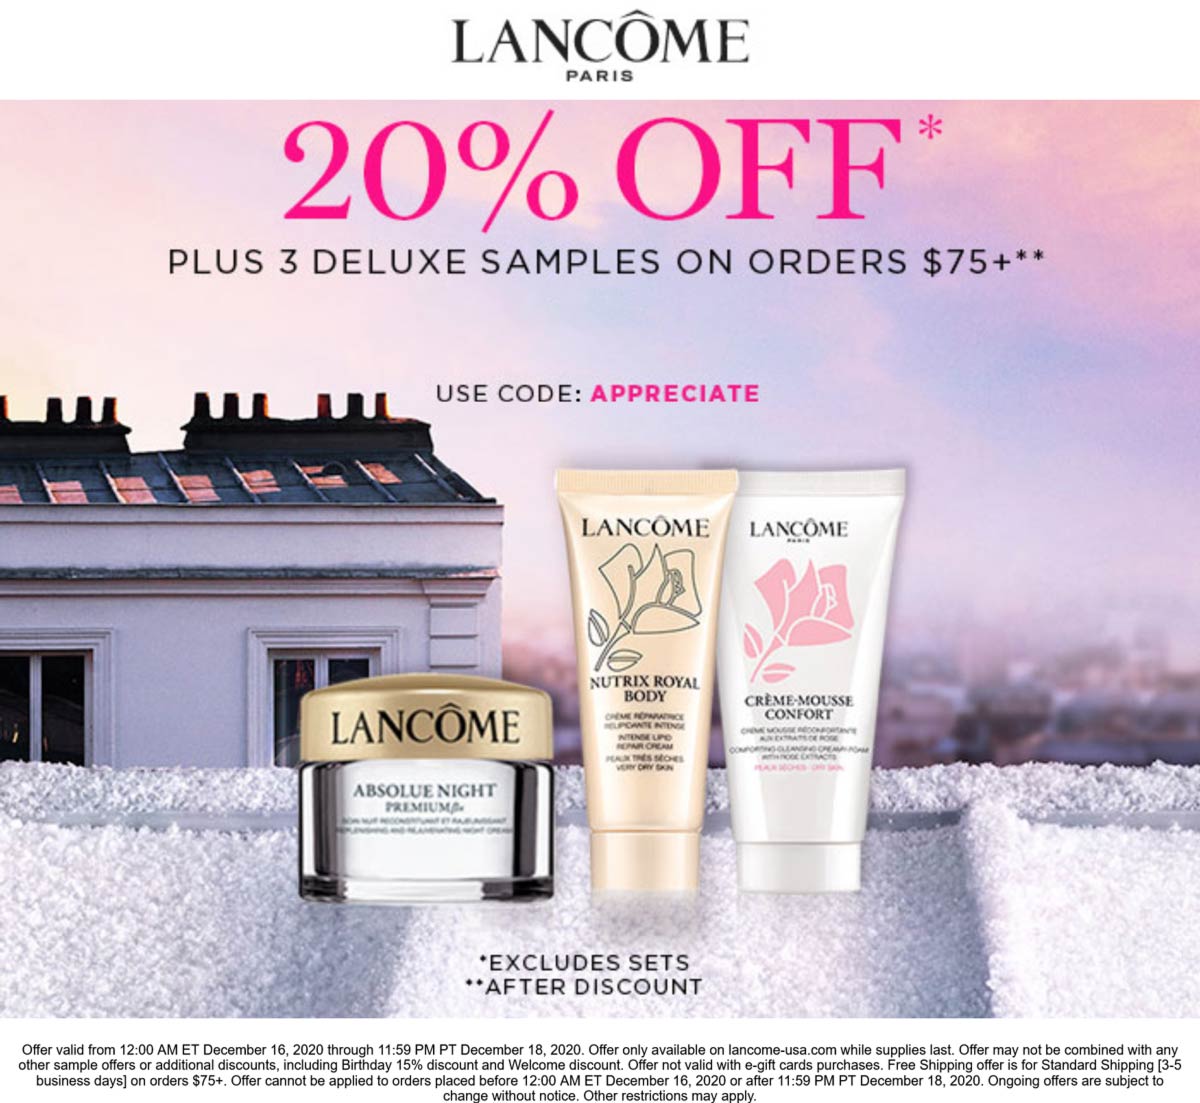 Lancome stores Coupon  20% off at Lancome cosmetics + 3 samples on $75 via promo code APPRECIATE #lancome 